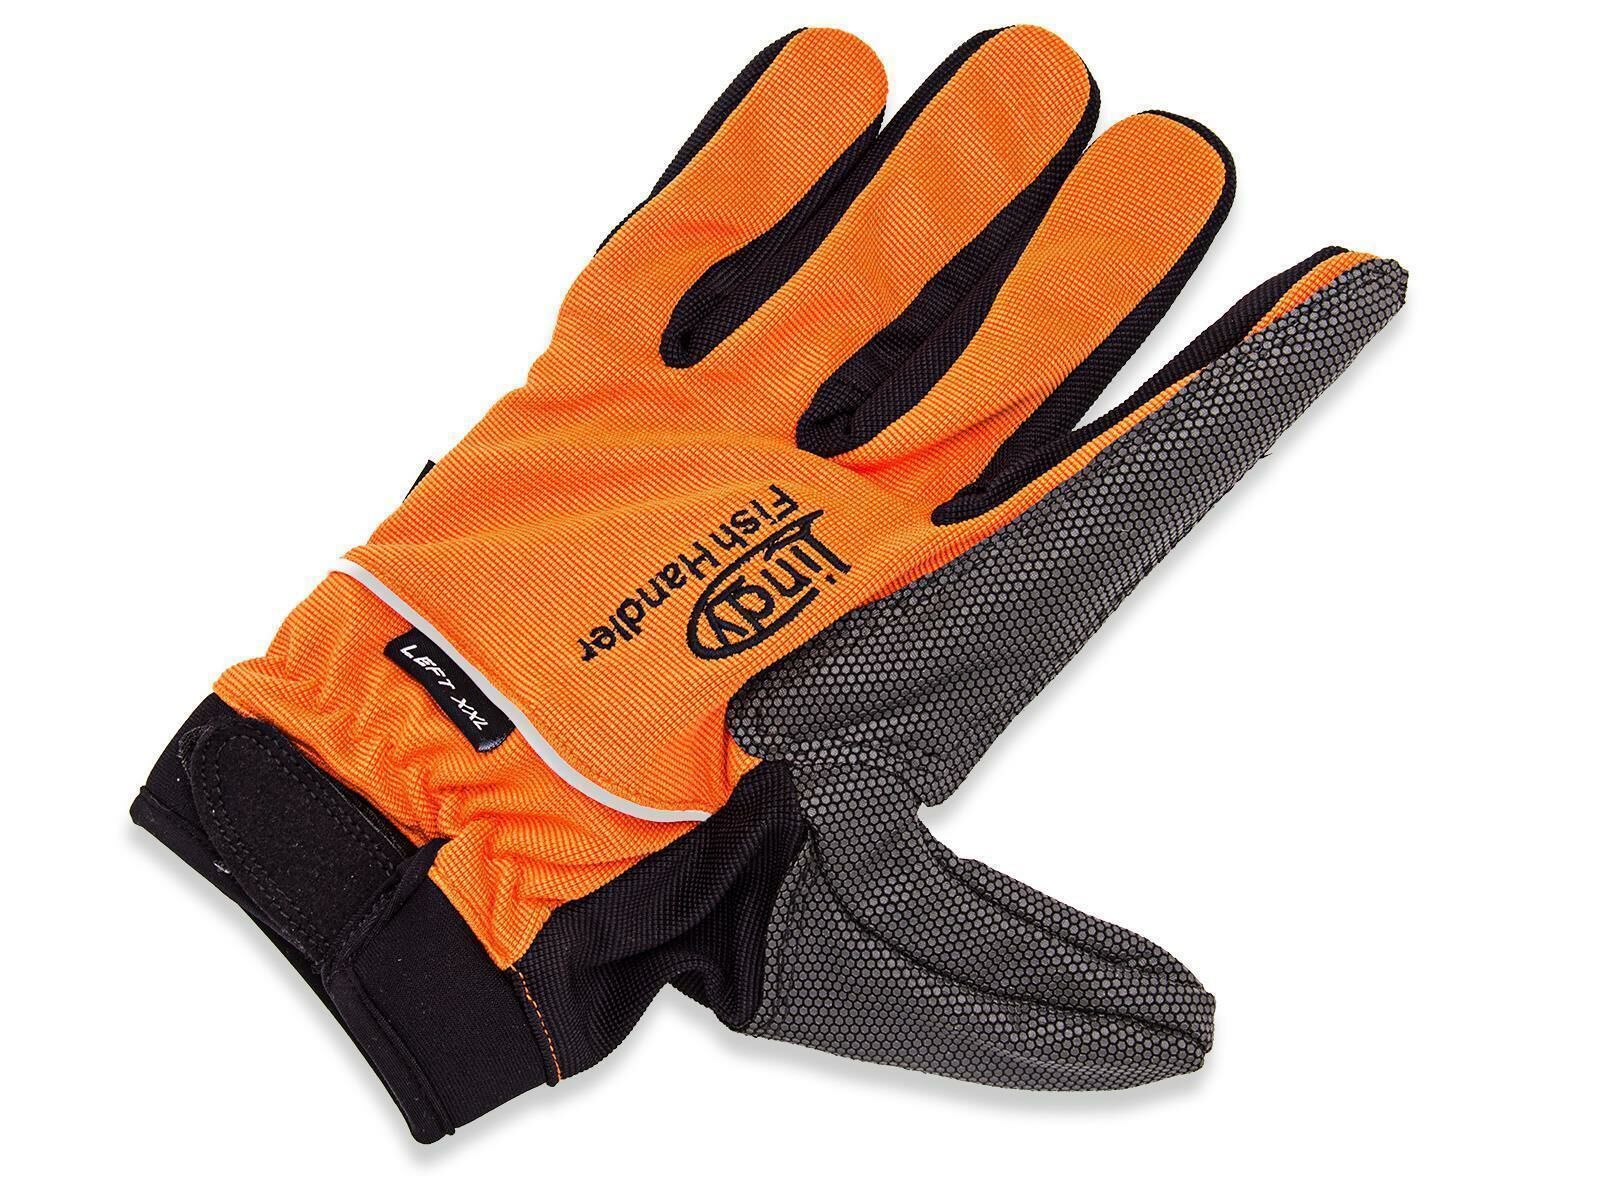 Lindy Fish Handling Glove - Left Size L/XL